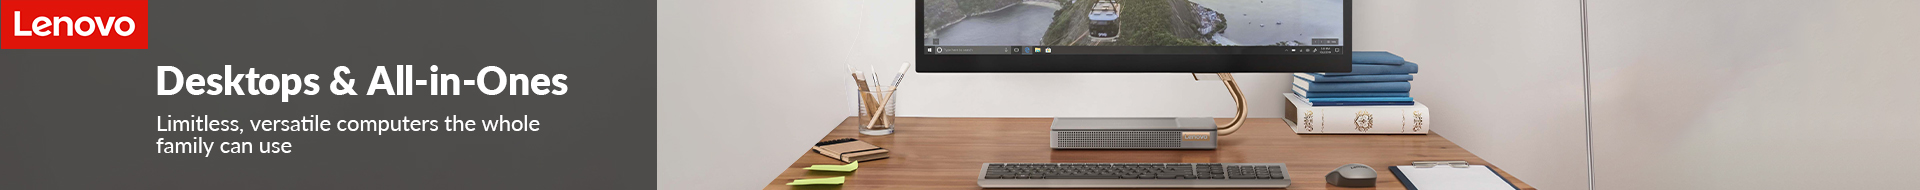 Lenovo Refresh Desktops 3.3.22thin